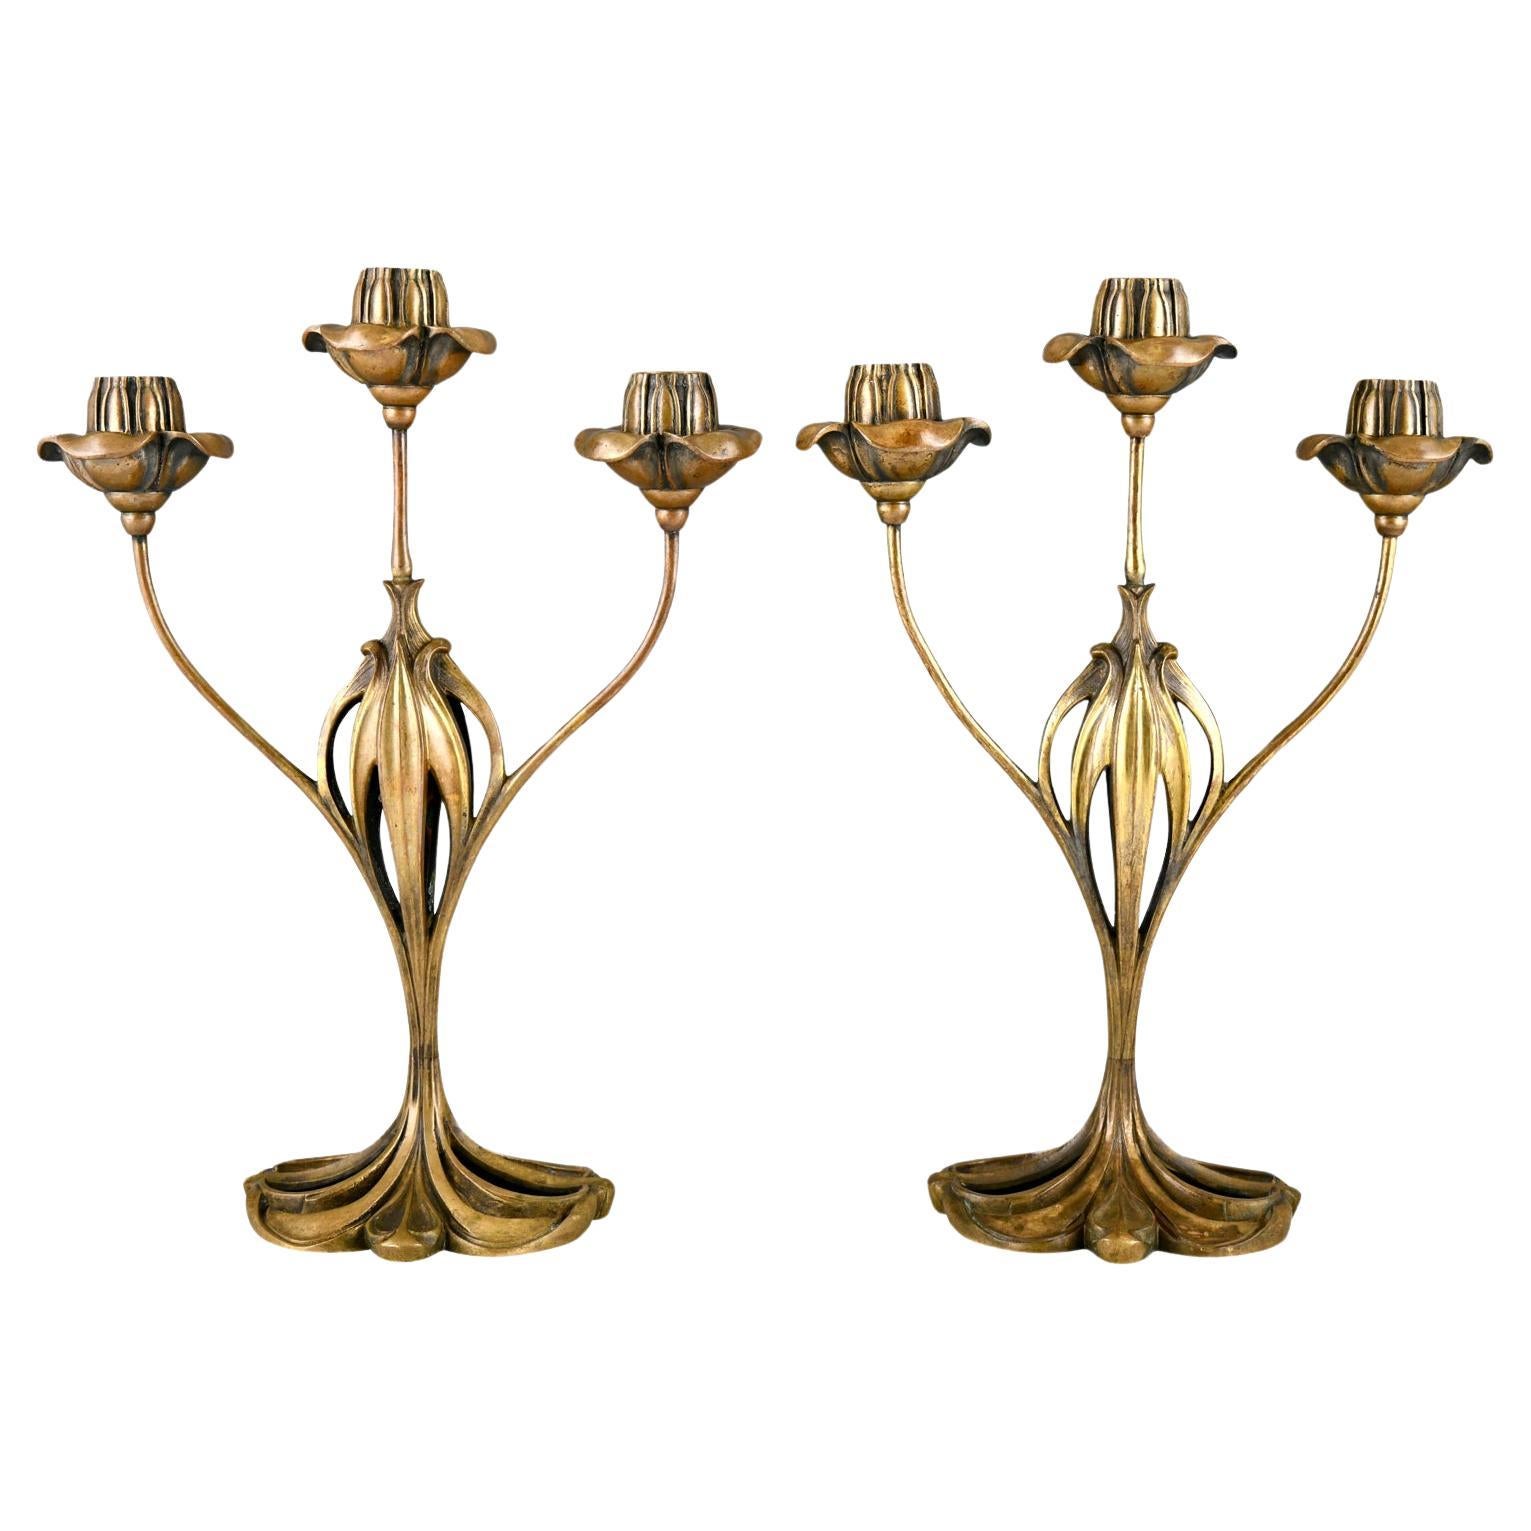 Pair of bronze Art Nouveau candelabra with floral design by Georges de Feure For Sale